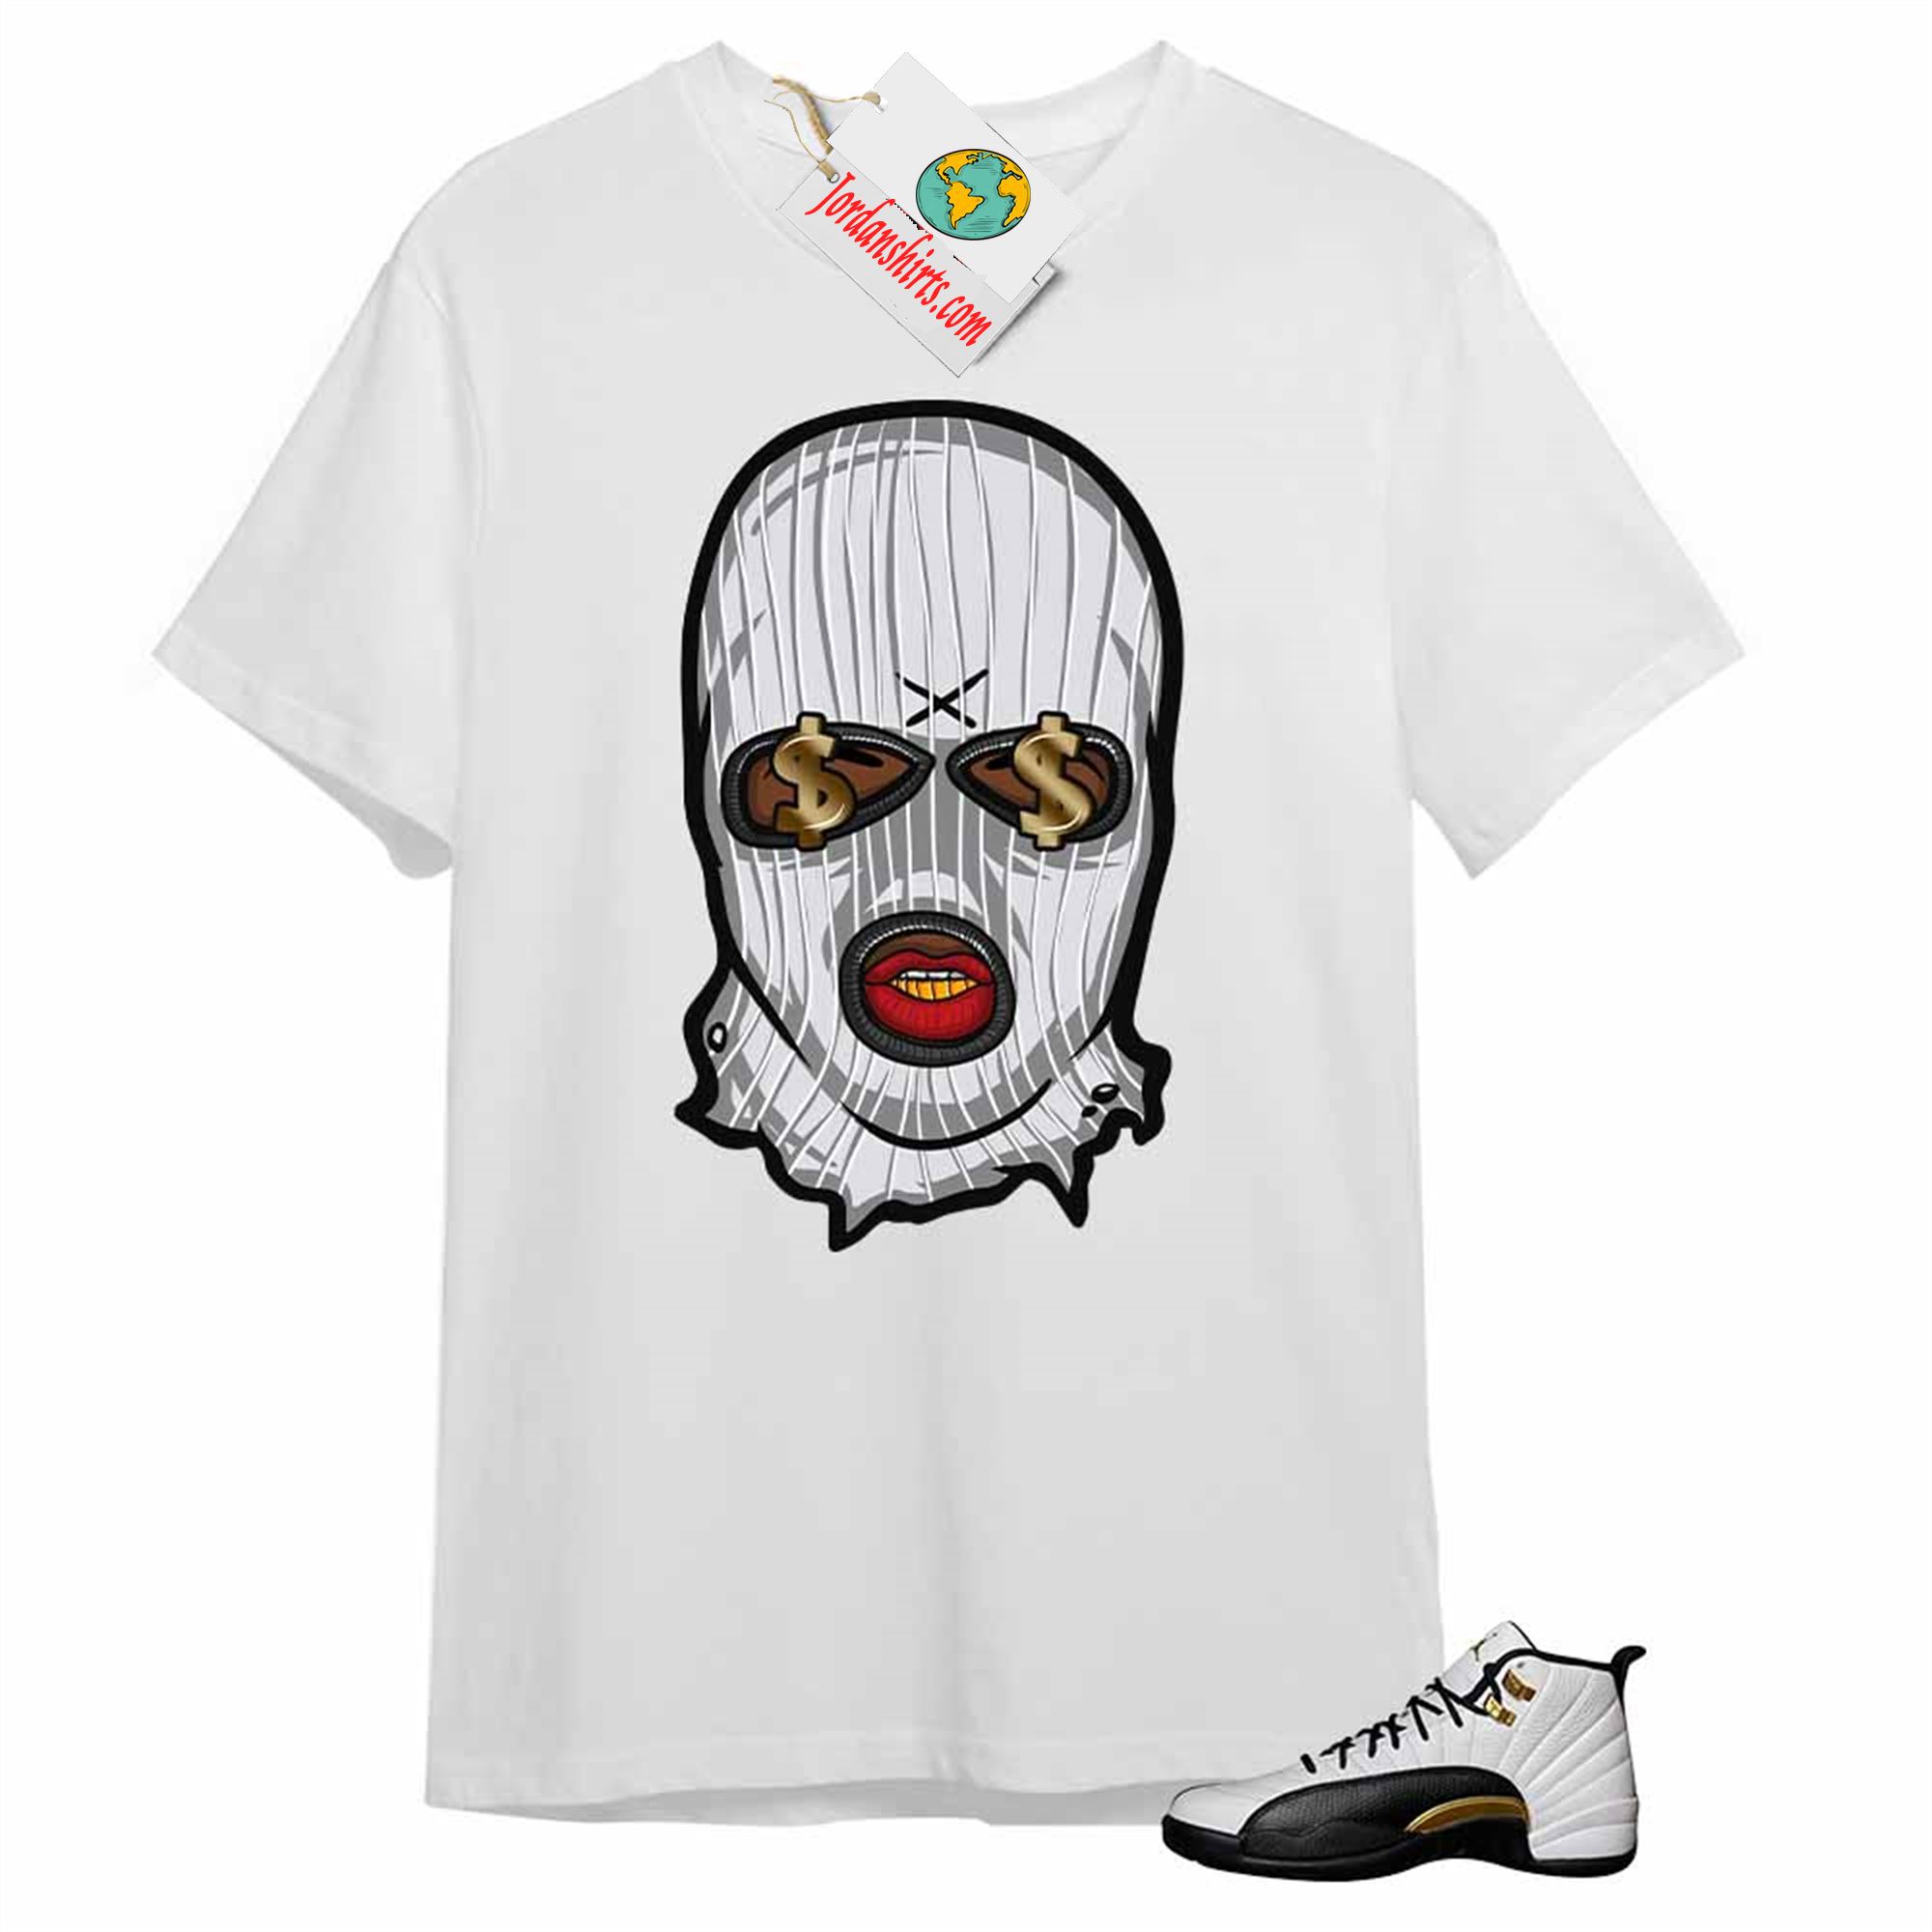 Jordan 12 Shirt, Gangster Ski Mask Money White Air Jordan 12 Royalty 12s Size Up To 5xl